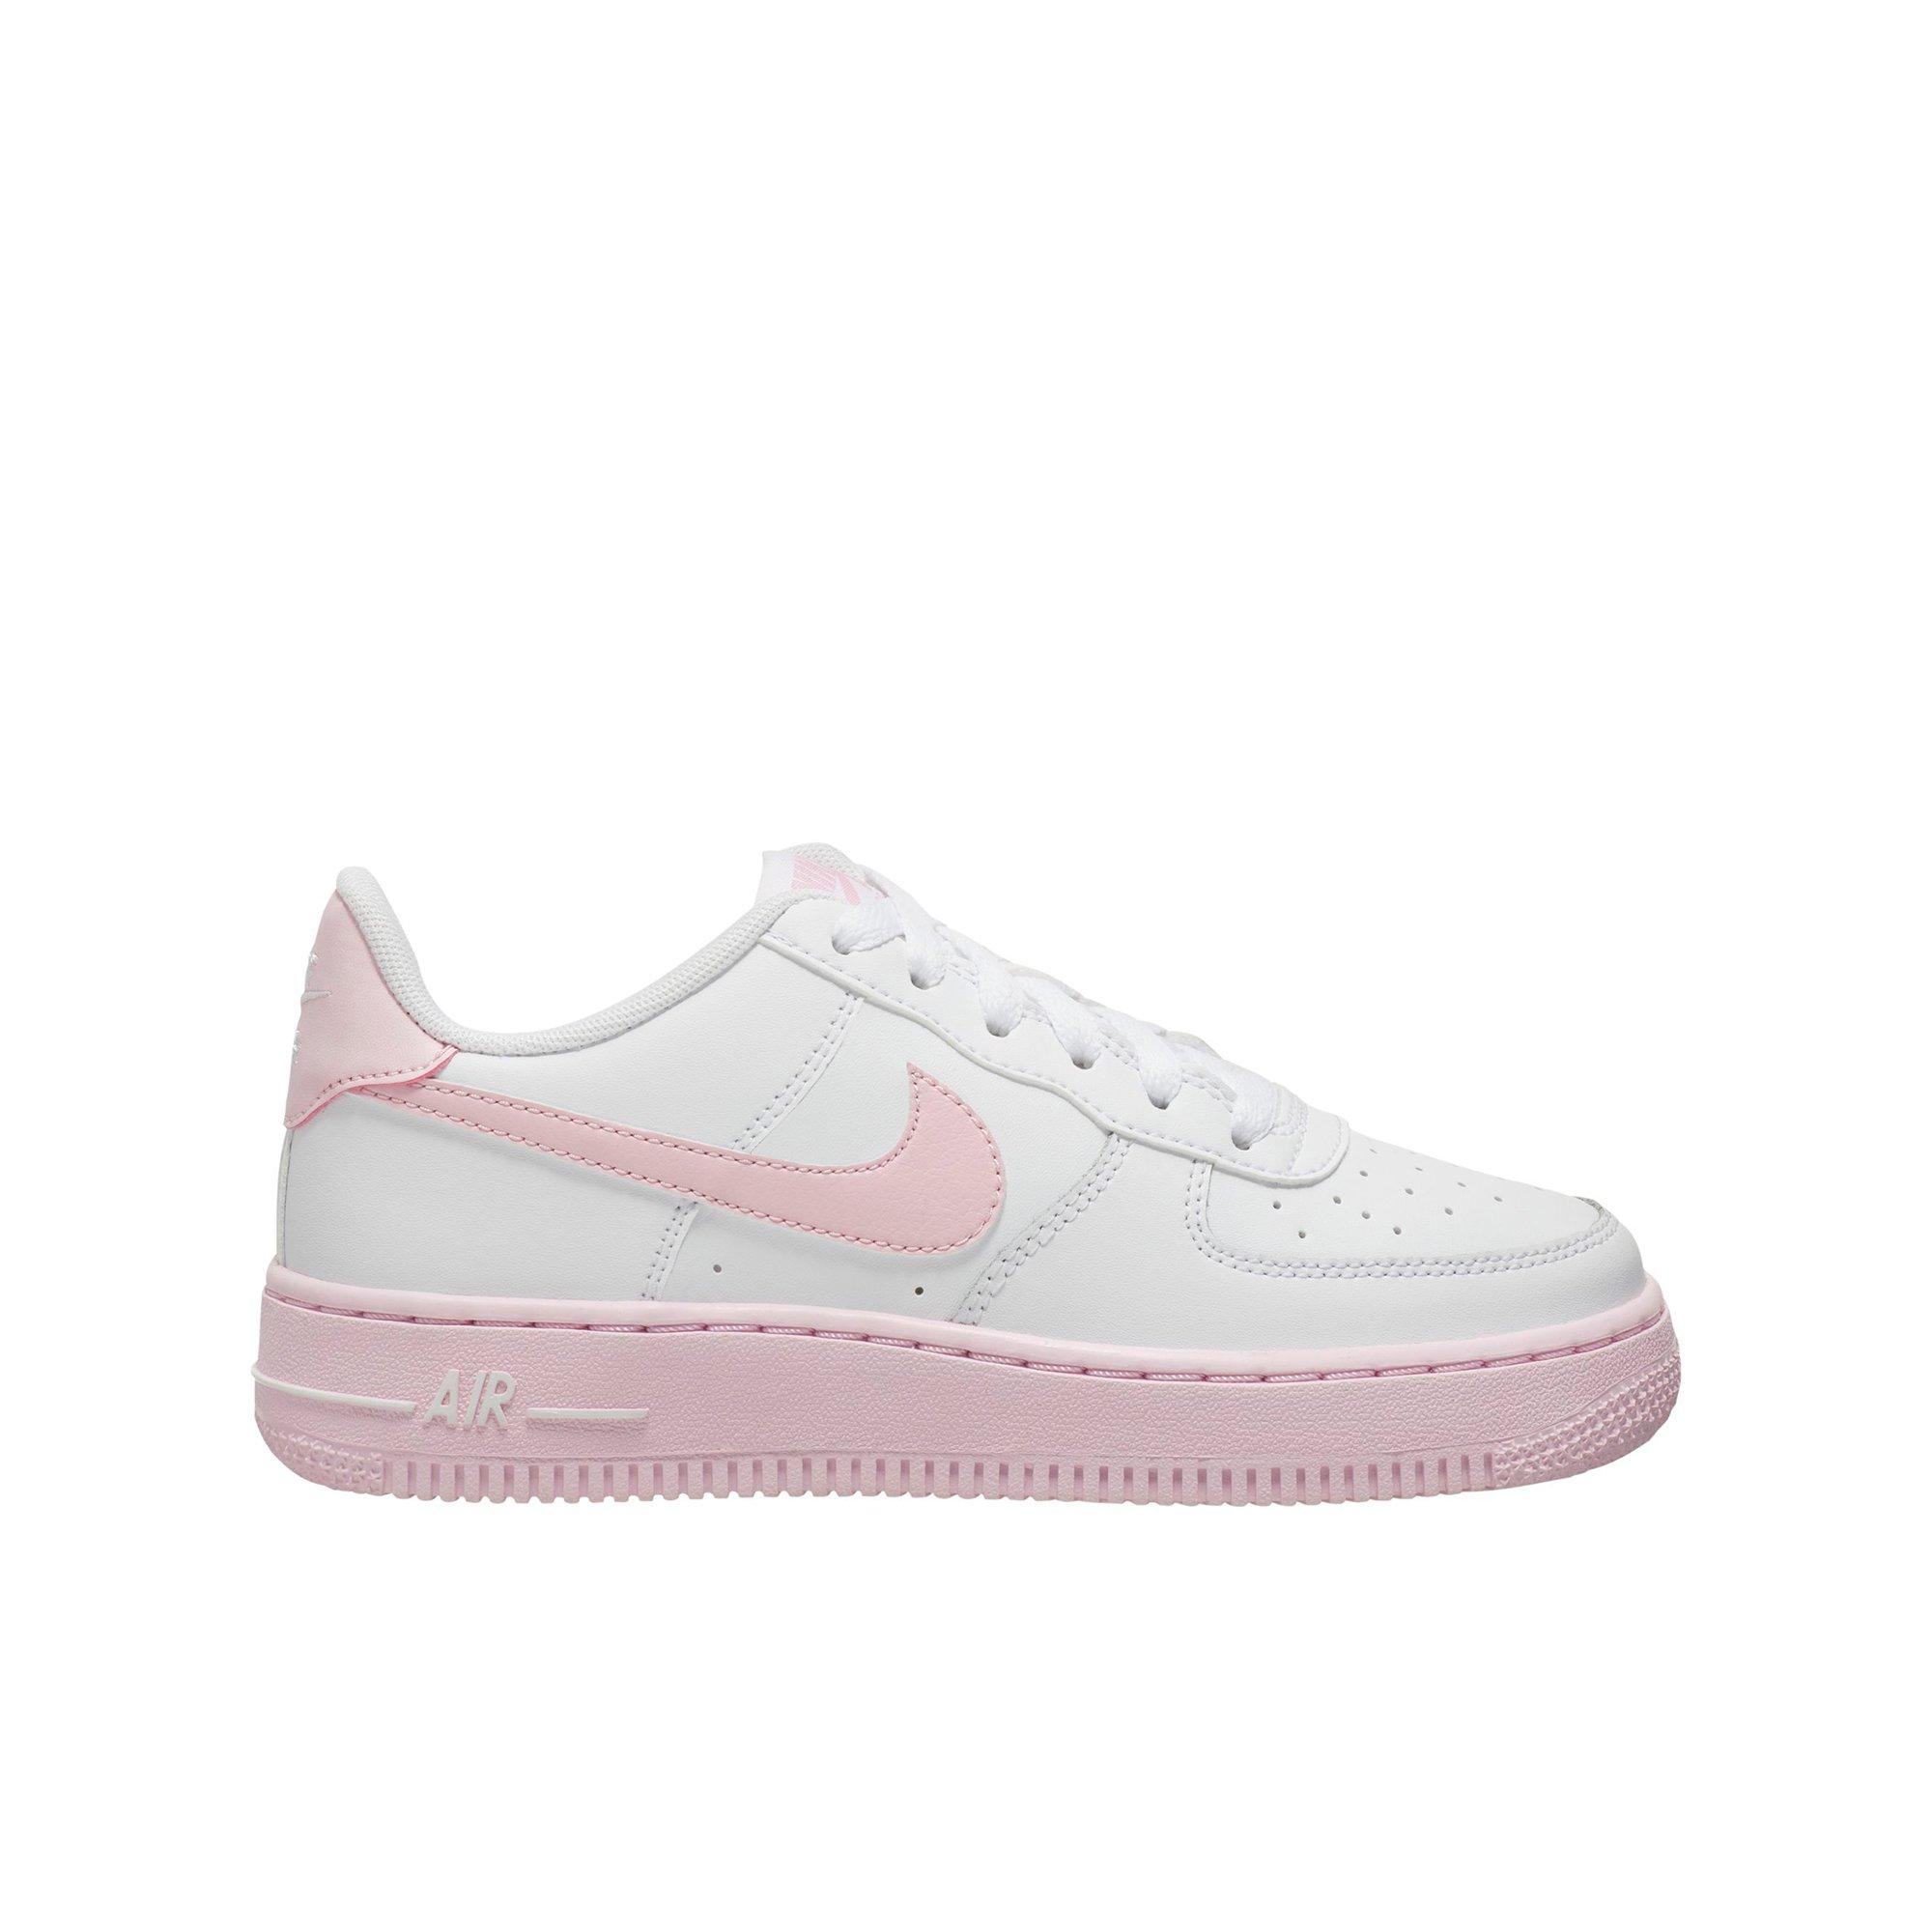 girls pink nike air force